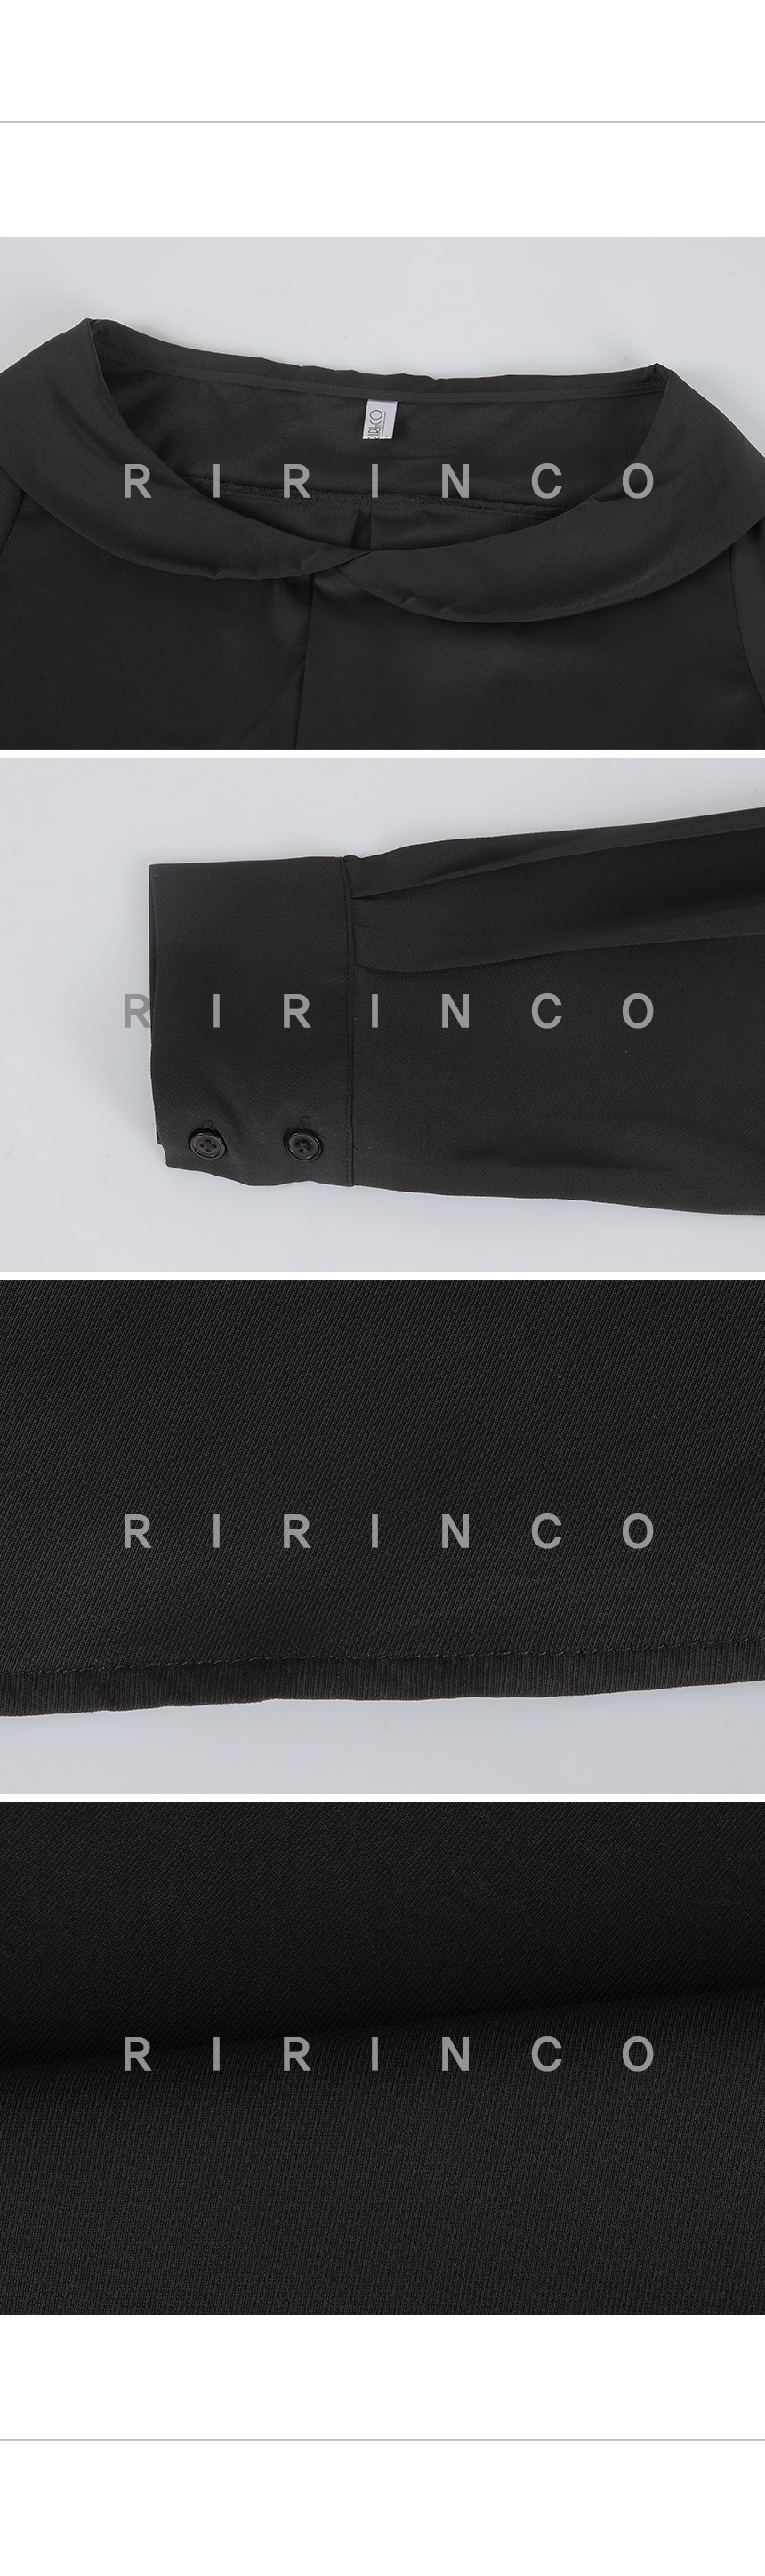 RIRINCO オープンカラークルーネックブラウス